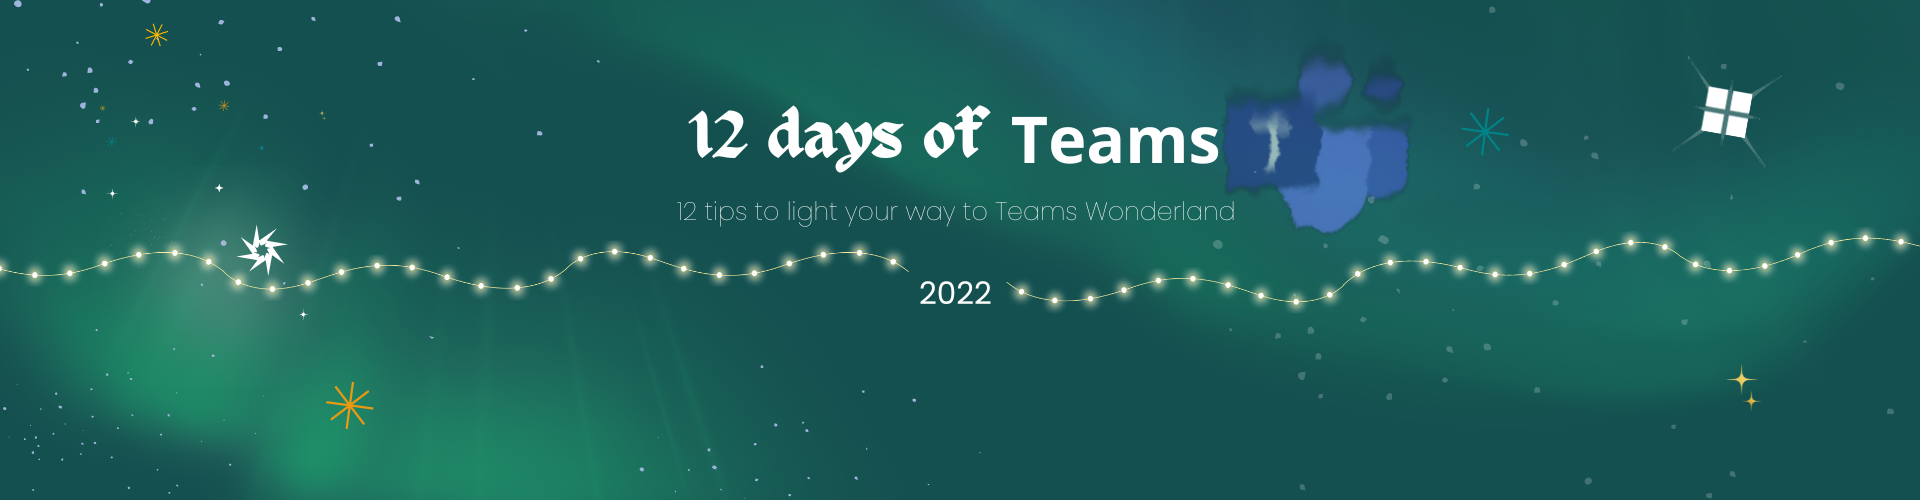 12 days of teams